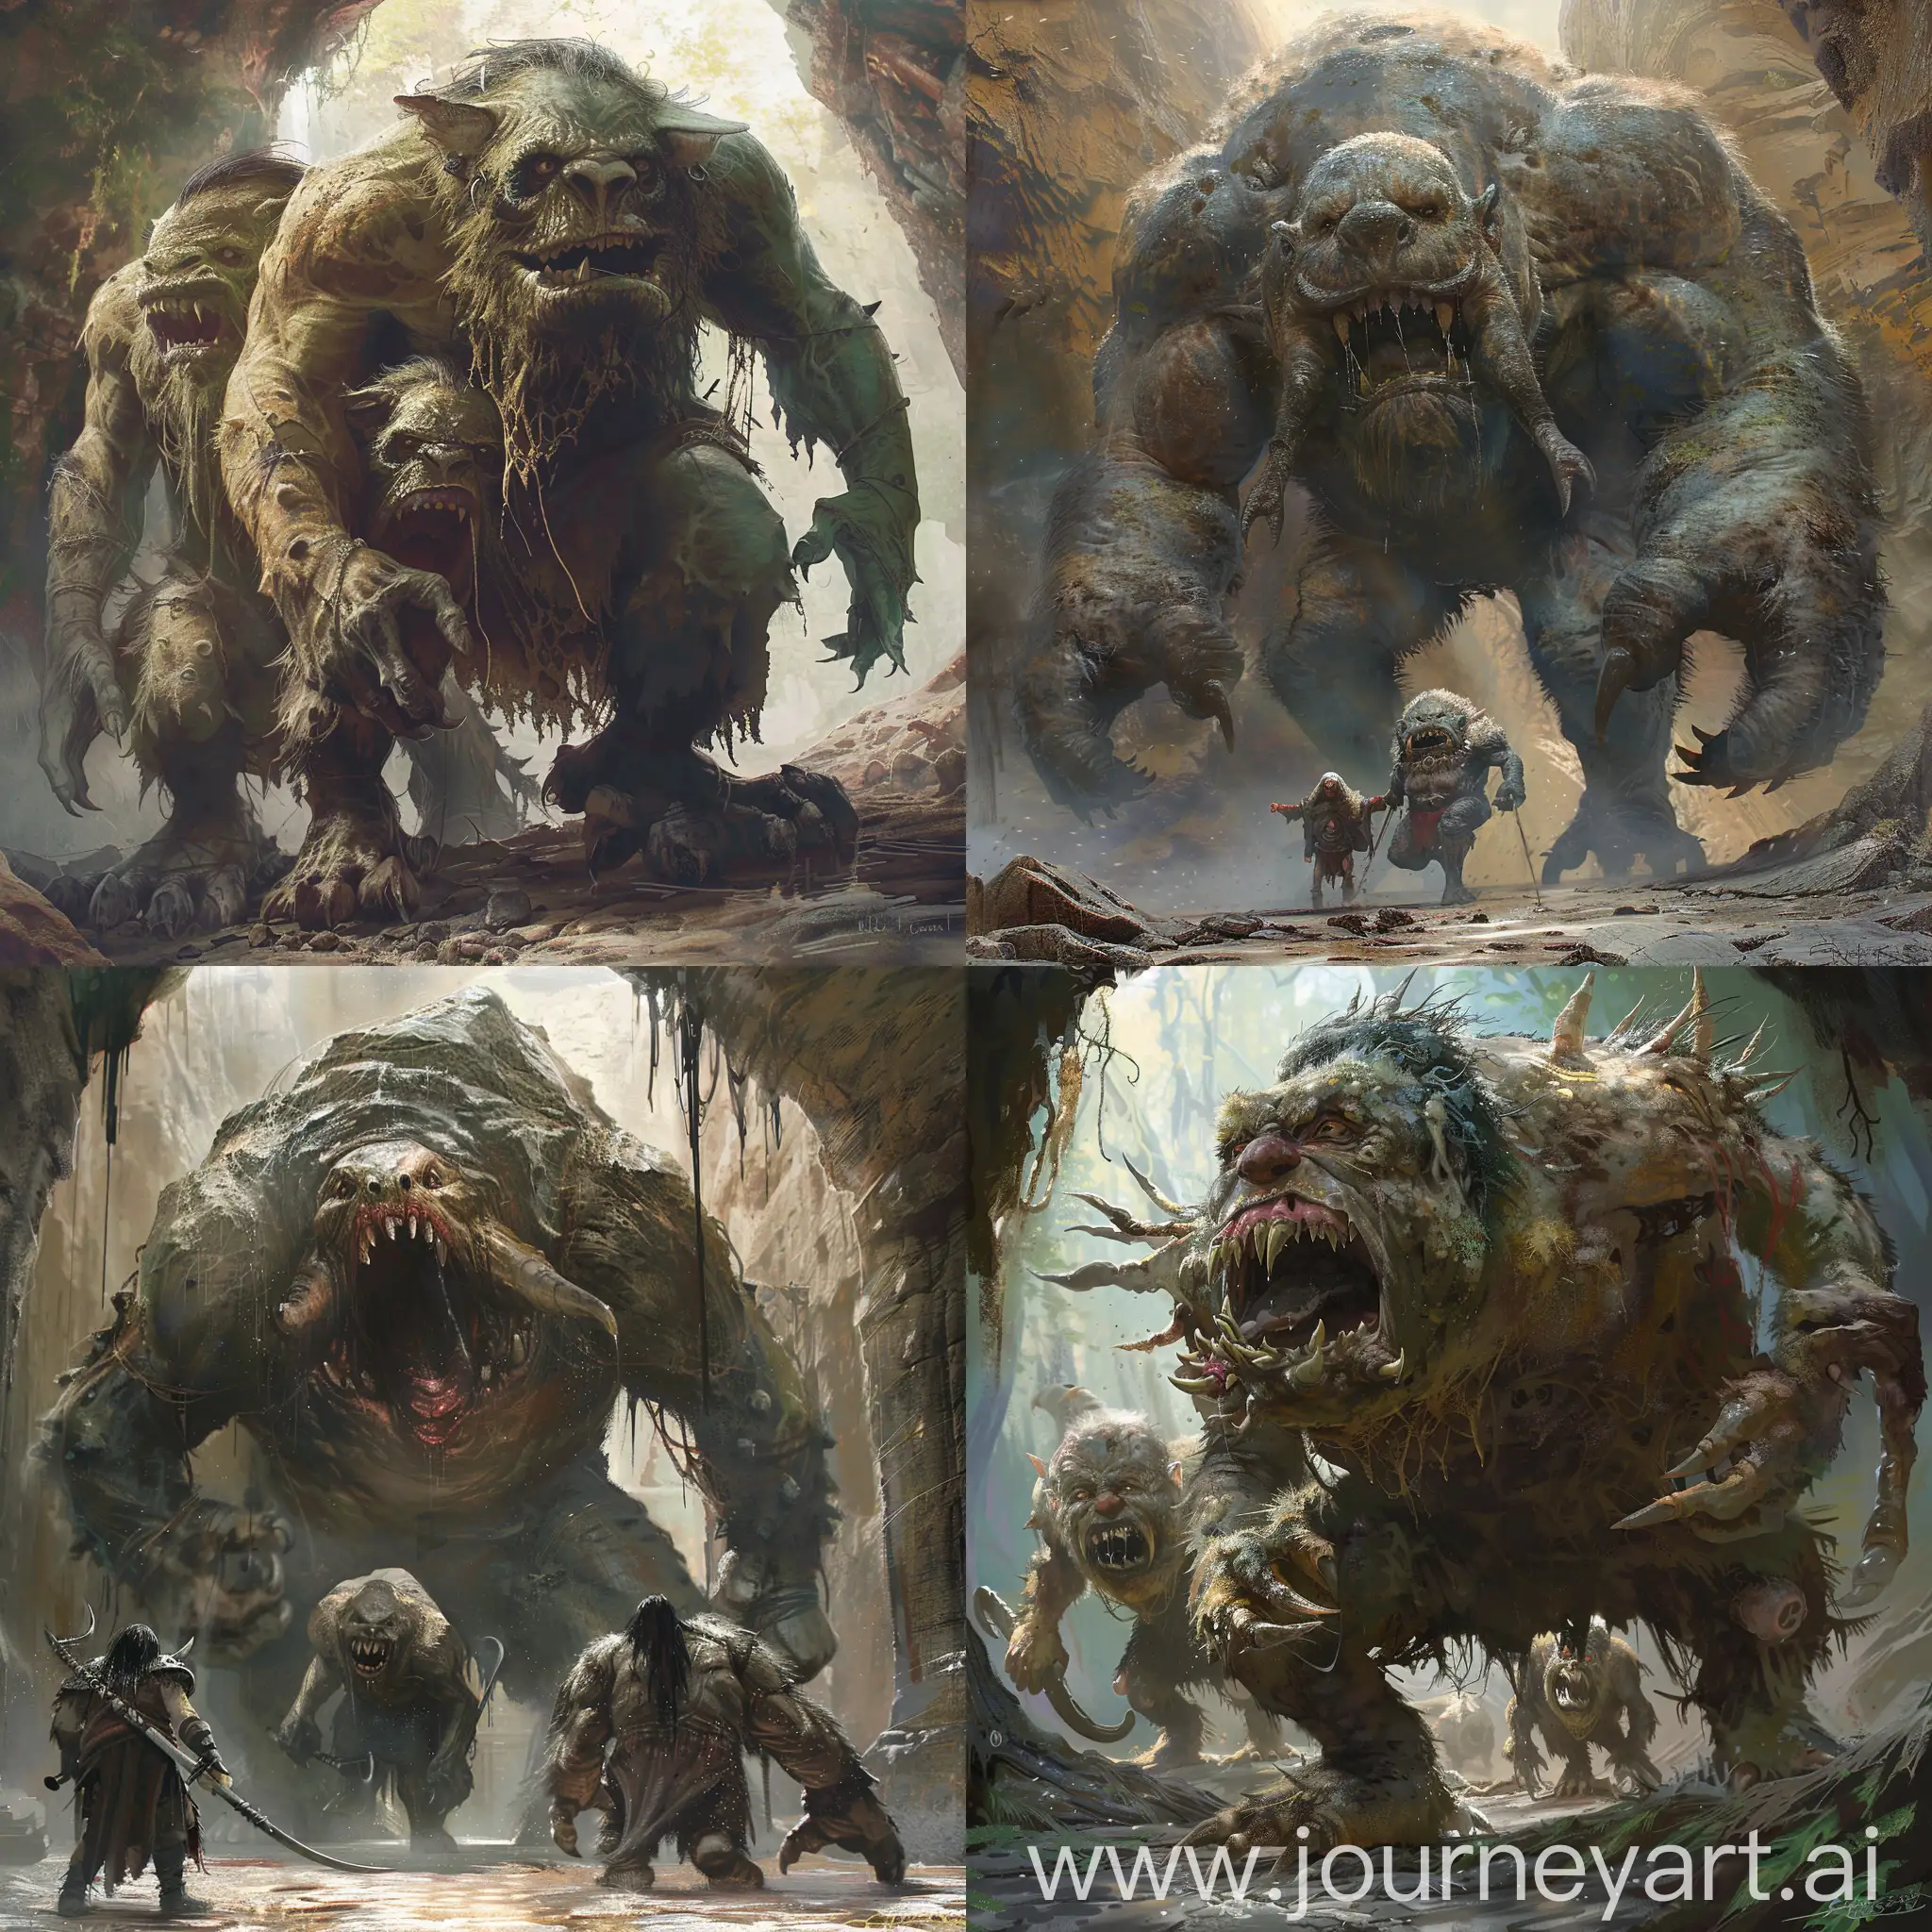 Extremely-Detailed-Concept-Art-of-Rick-Riordans-Monster-Trolls